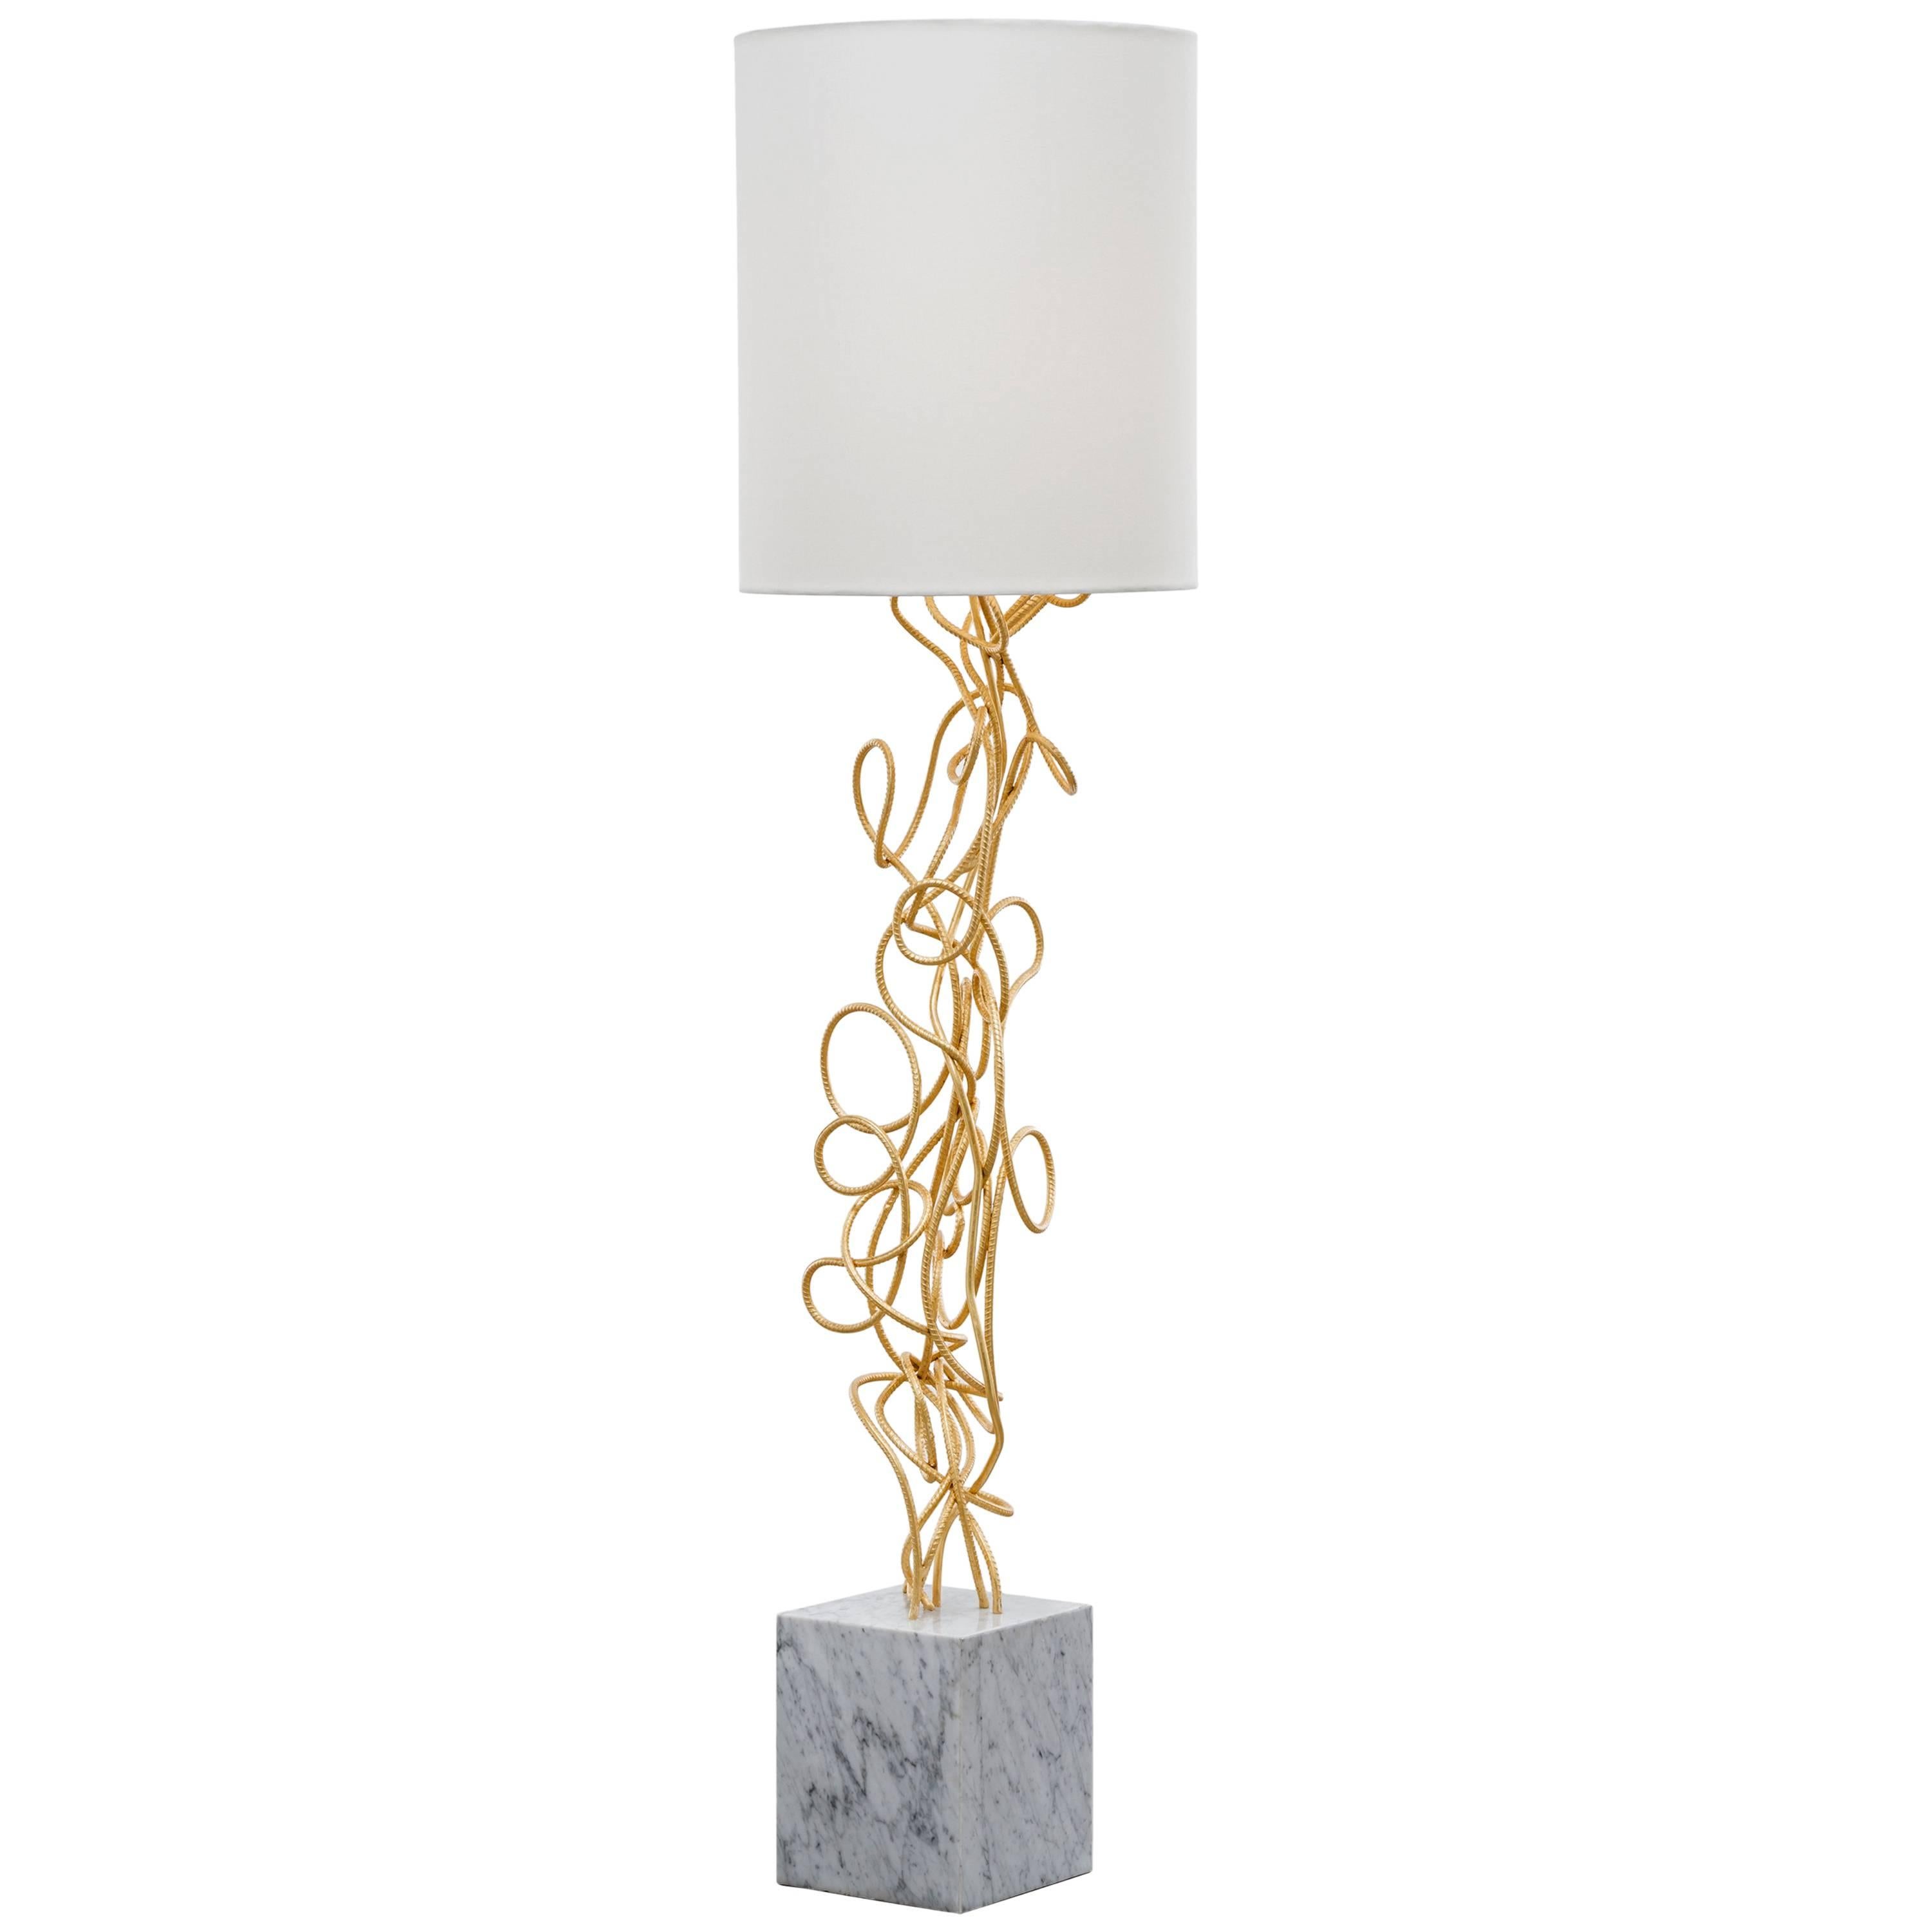 DAX FLOOR LAMP - Hand Twisted Modern Gold Leaf Floor Lamp w/ Carrara Marble Base For Sale